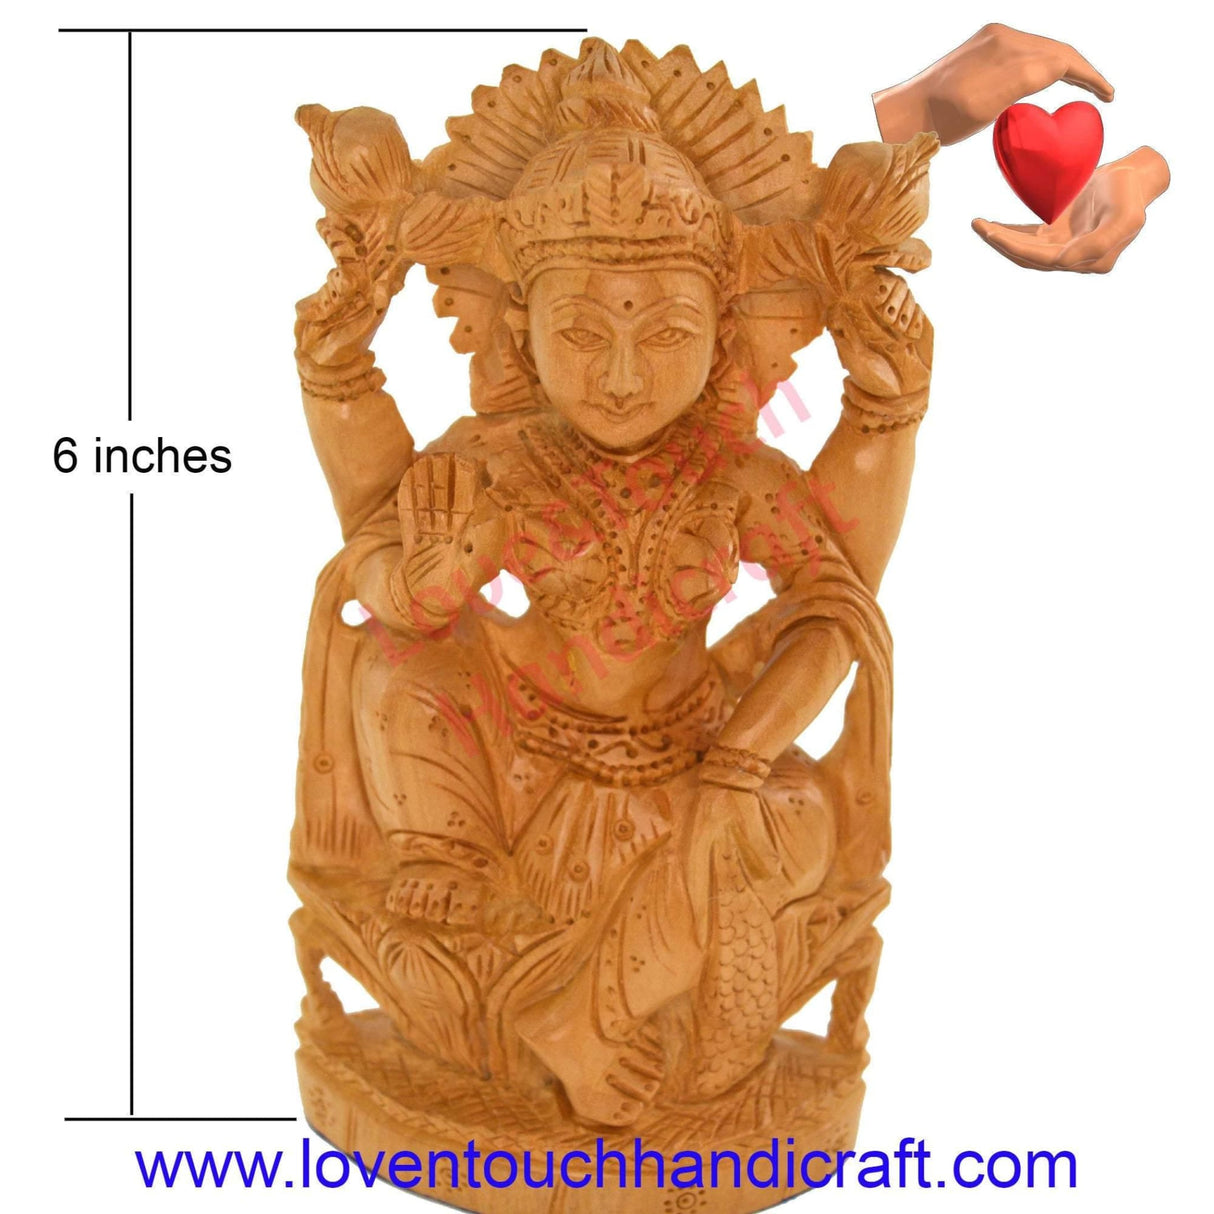 Laxmi ji statue wooden indian goddess lakshmi maa murti